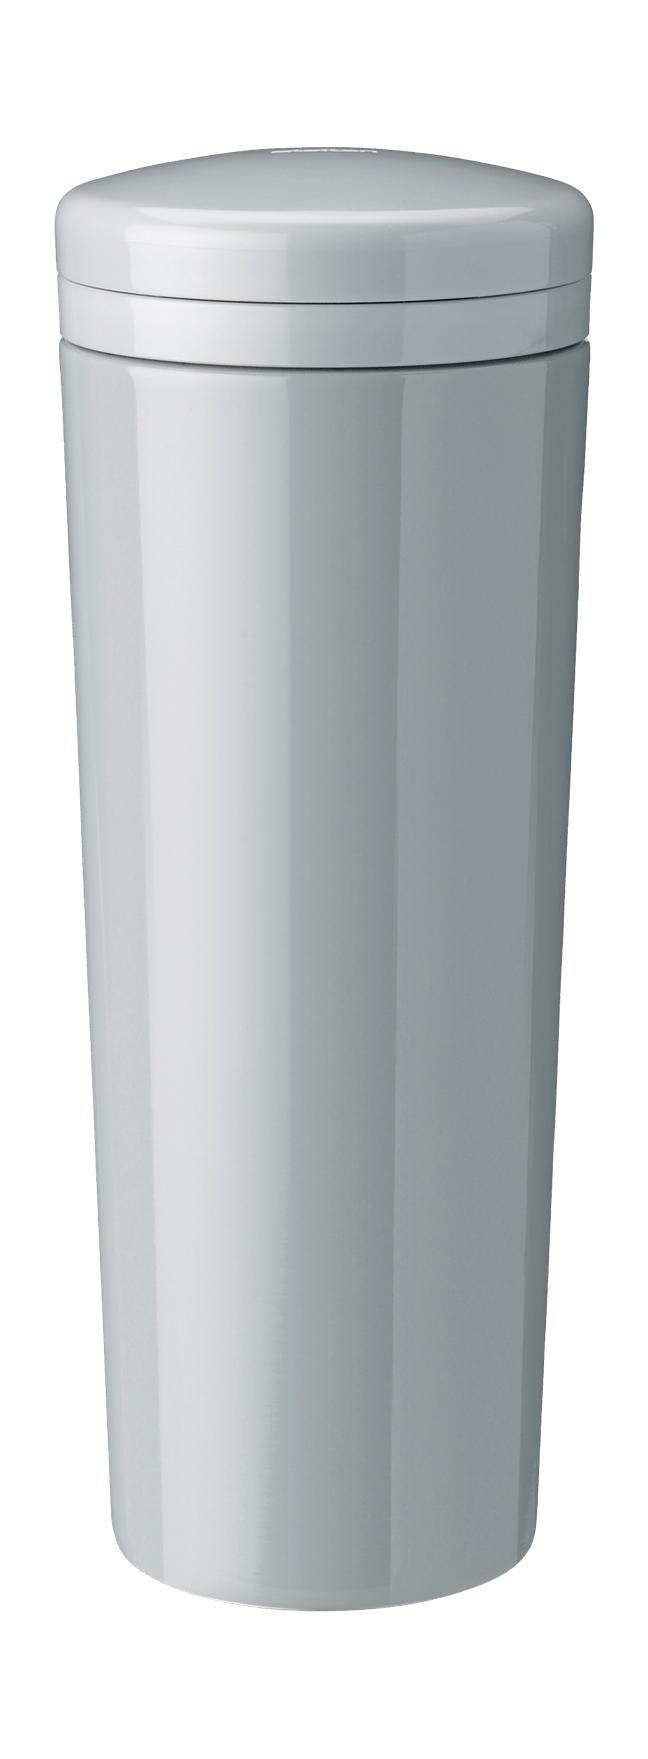 Stelton Carrie Thermos Bottle 0,5 L, gris claro